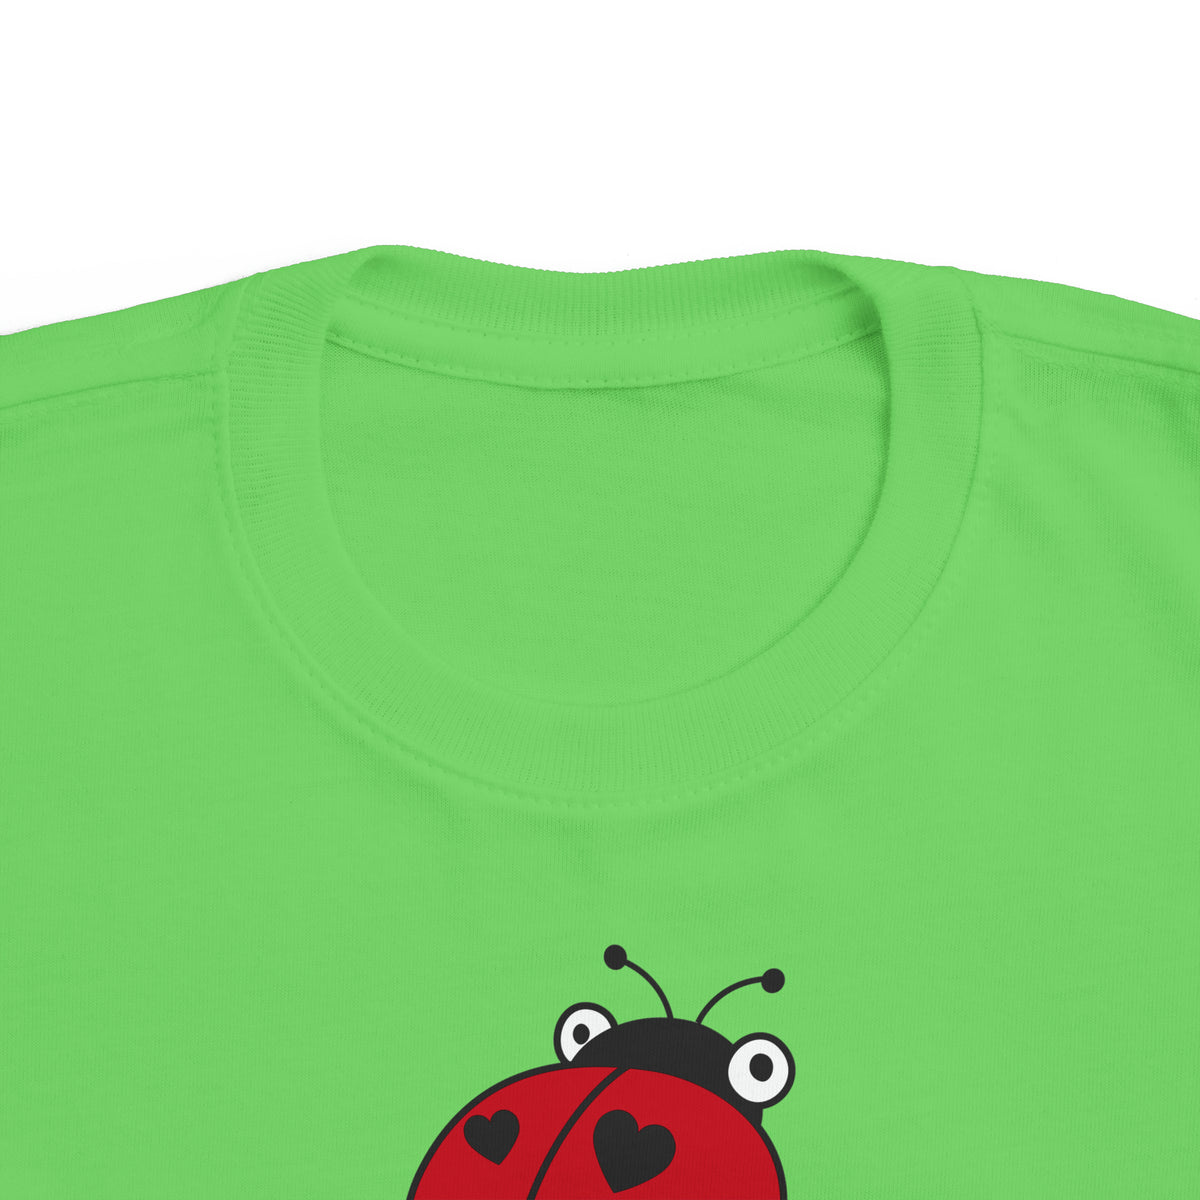 Love Bug Lady Bug Valentine's Day Shirt | Ladybug Nature Gift | Kid's Toddler Fine Jersey T-shirt